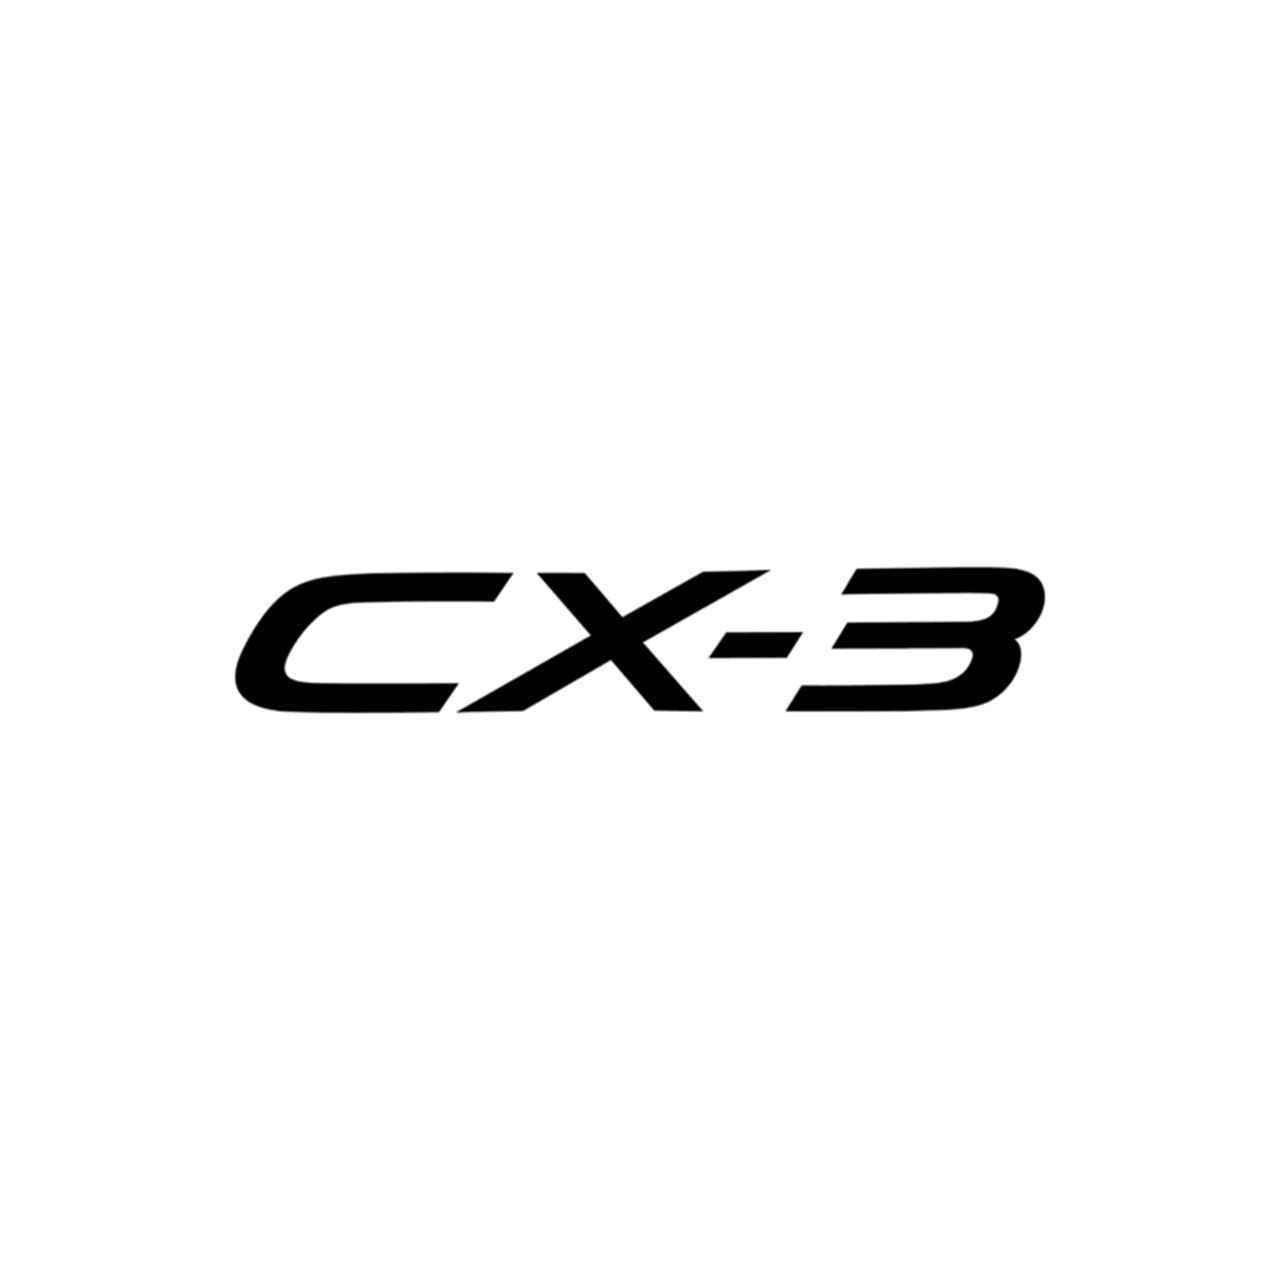 CX Logo - Mazda Cx 3 Logo Vinyl Decal